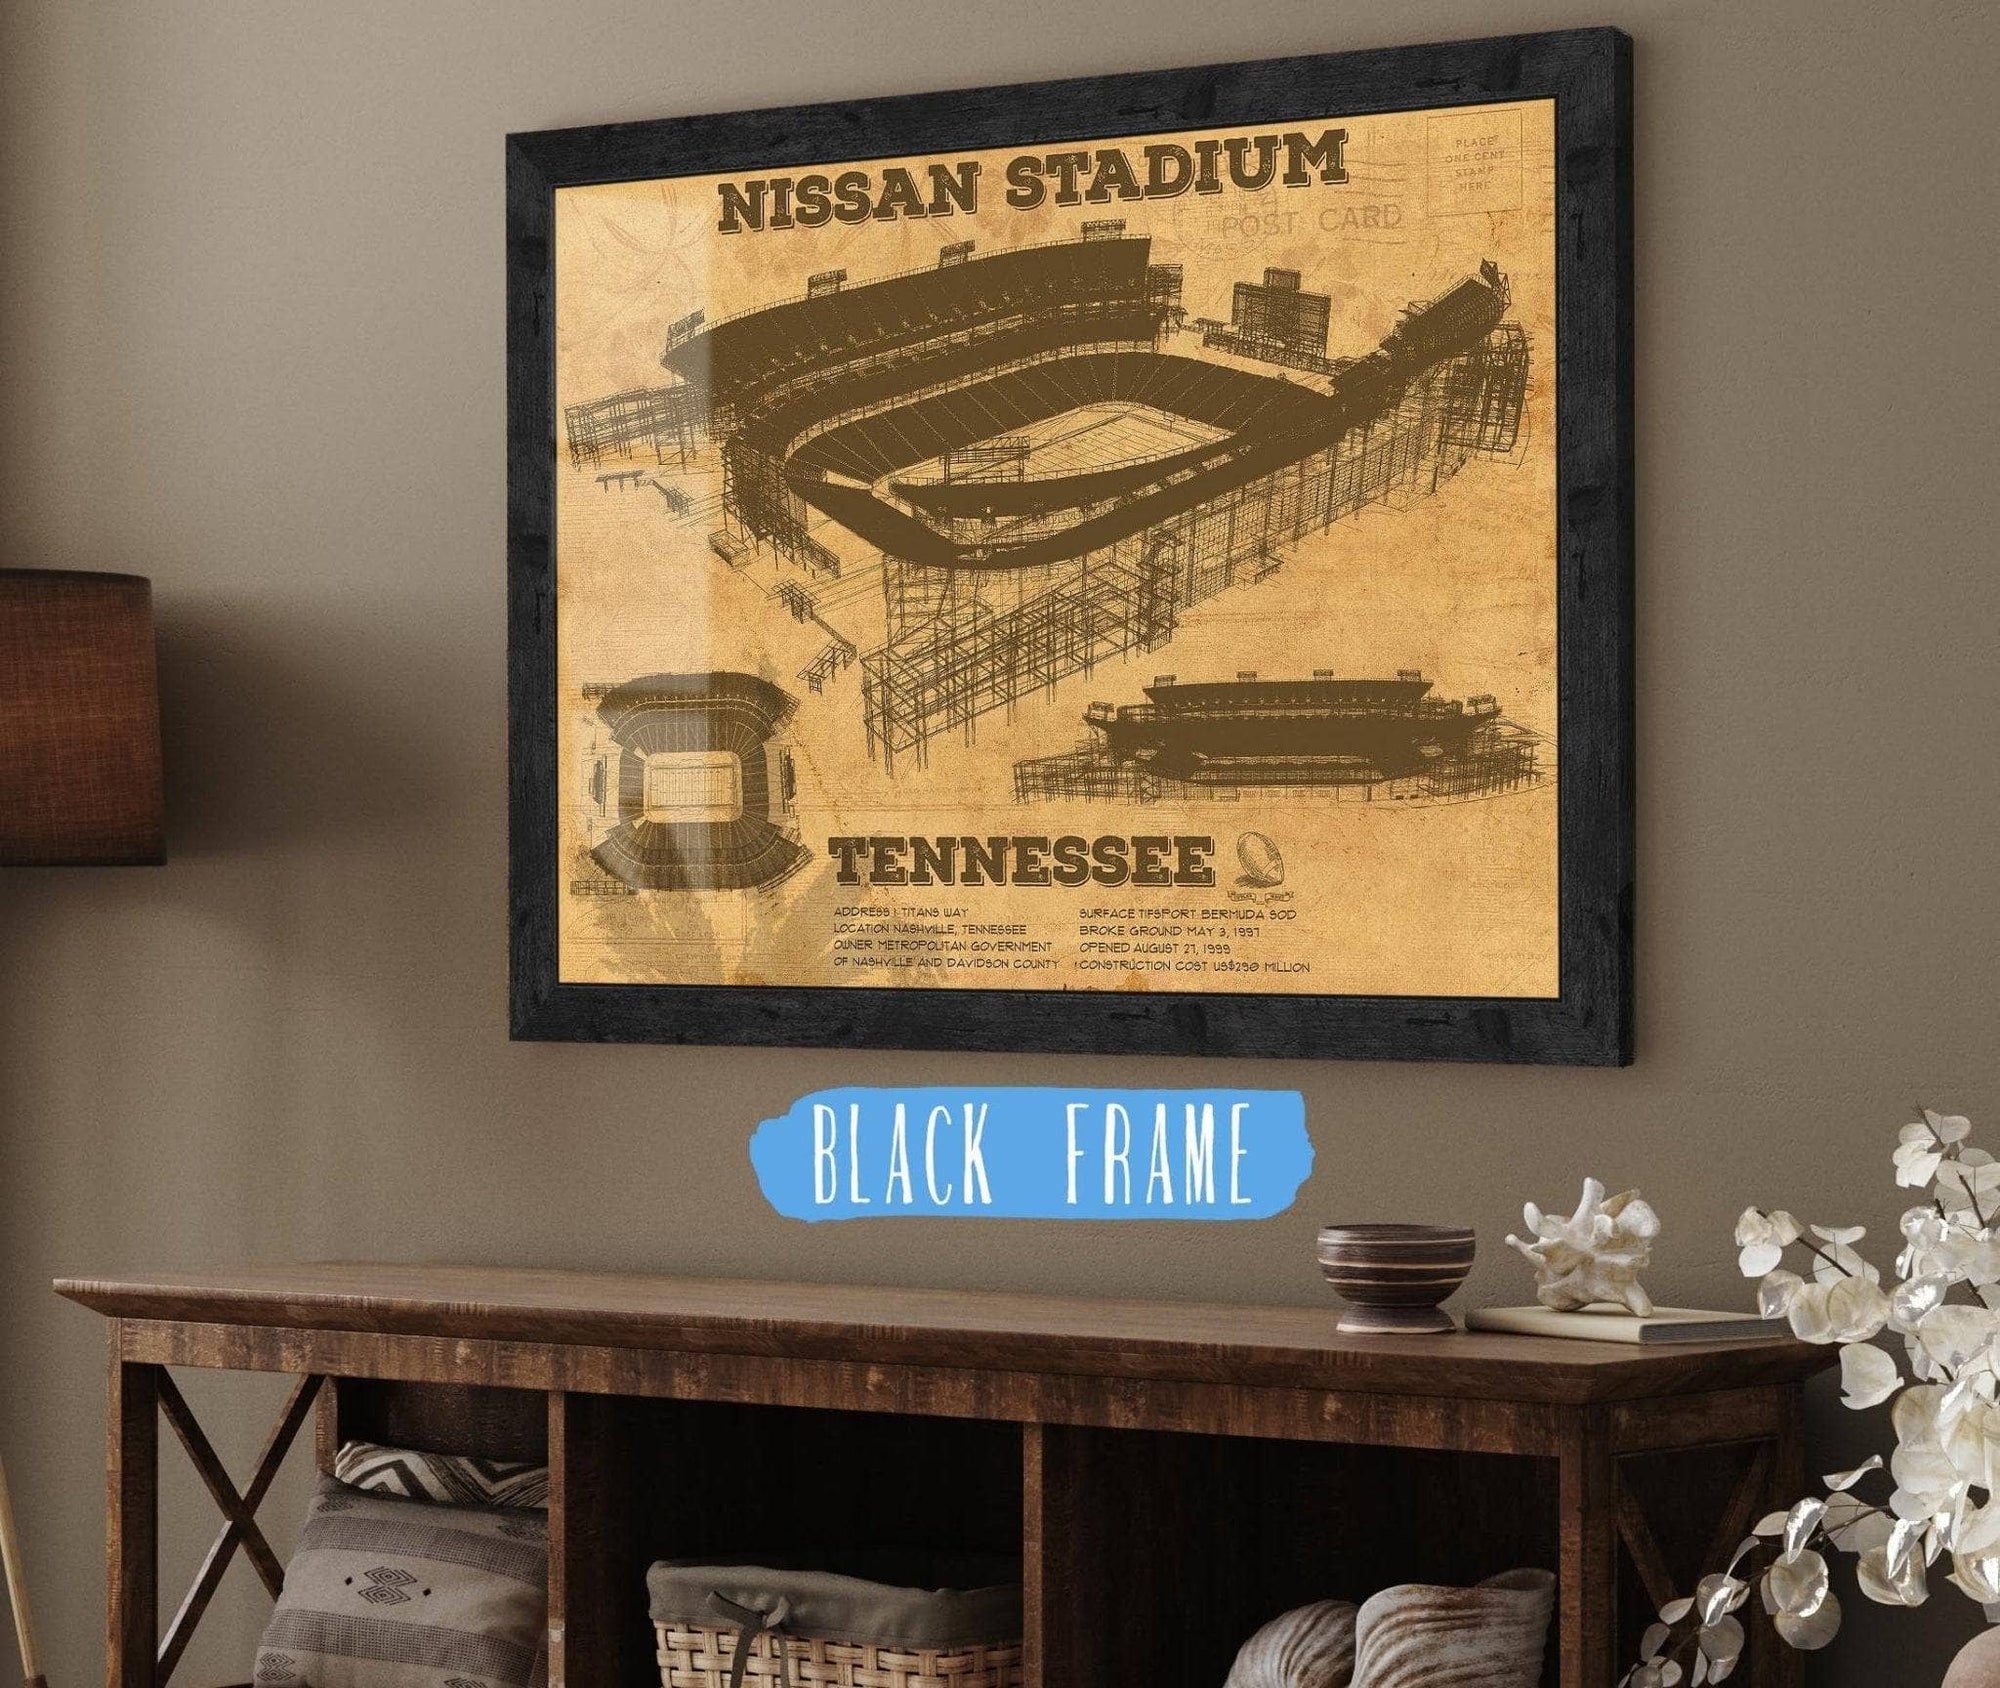 Cutler West Pro Football Collection 14" x 11" / Black Frame Tennessee Titans Nissan Stadium - Vintage Football Print 723978276_71088